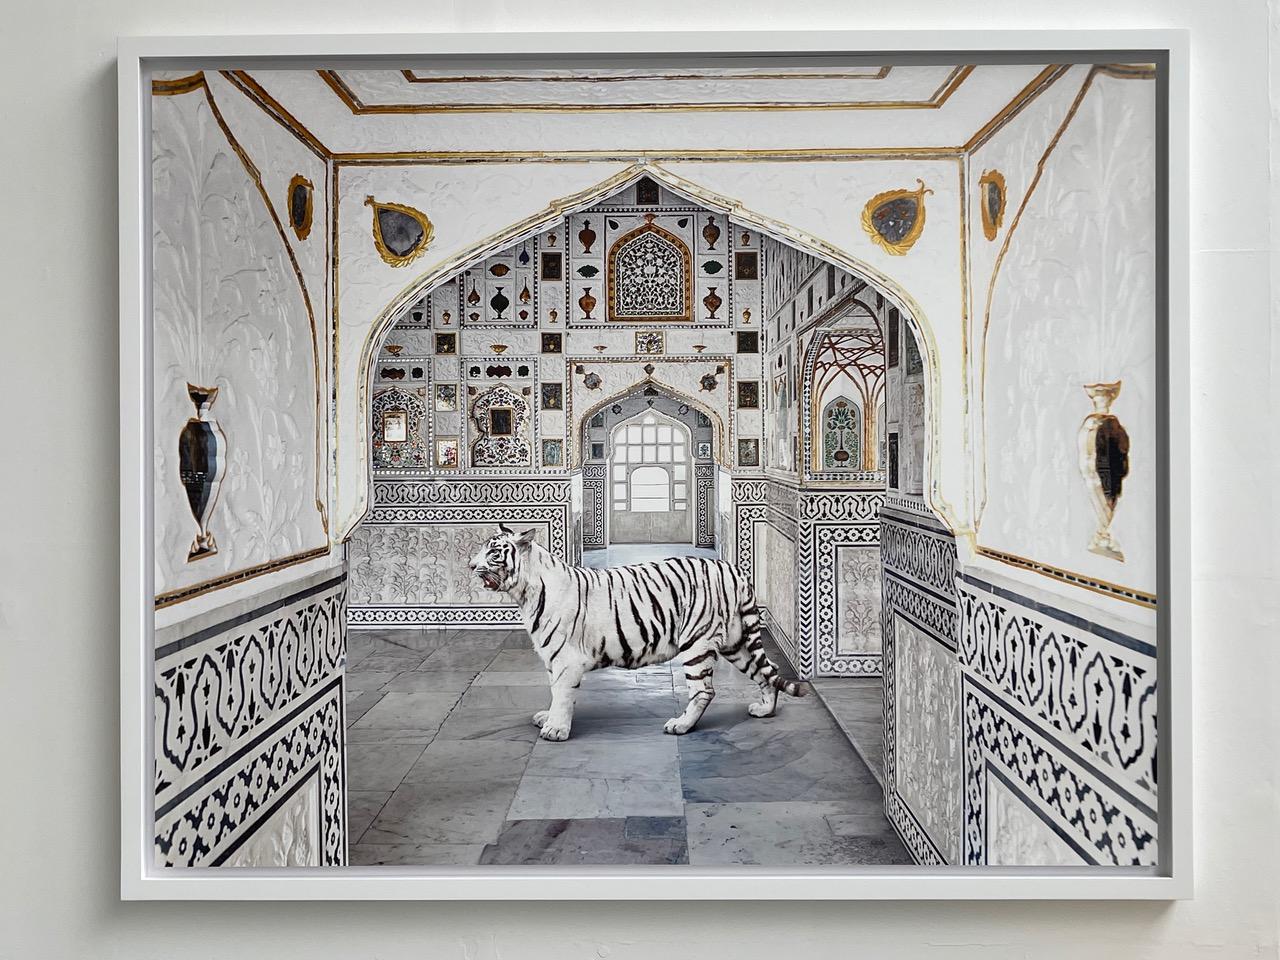 Souffle du tigre, Seesh Mahal, Amer Fort, 2020 - Photograph de Karen Knorr